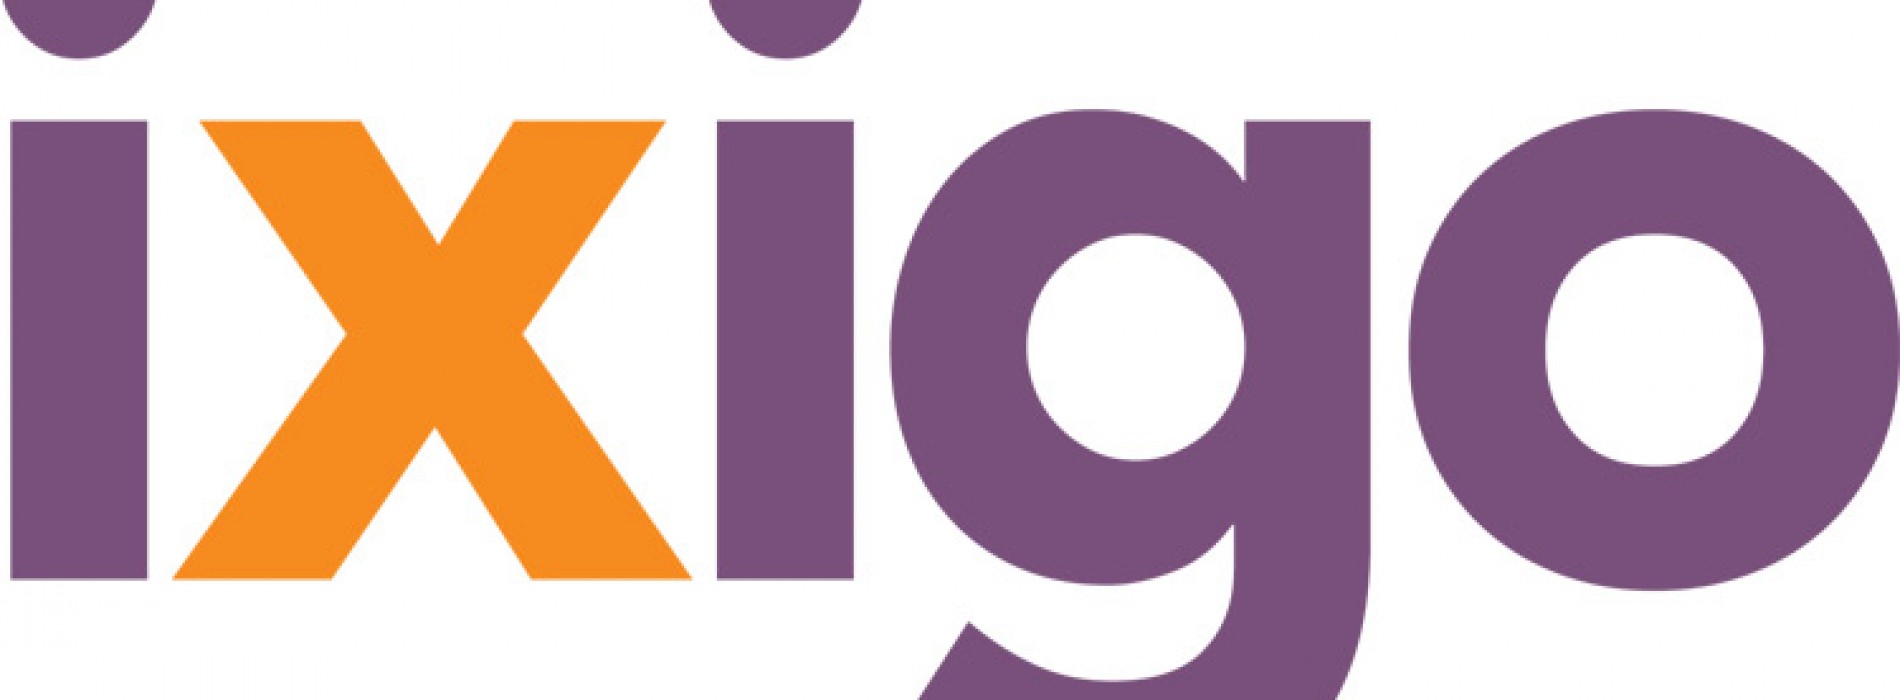 ixigo announces partnership with Treebo Hotels